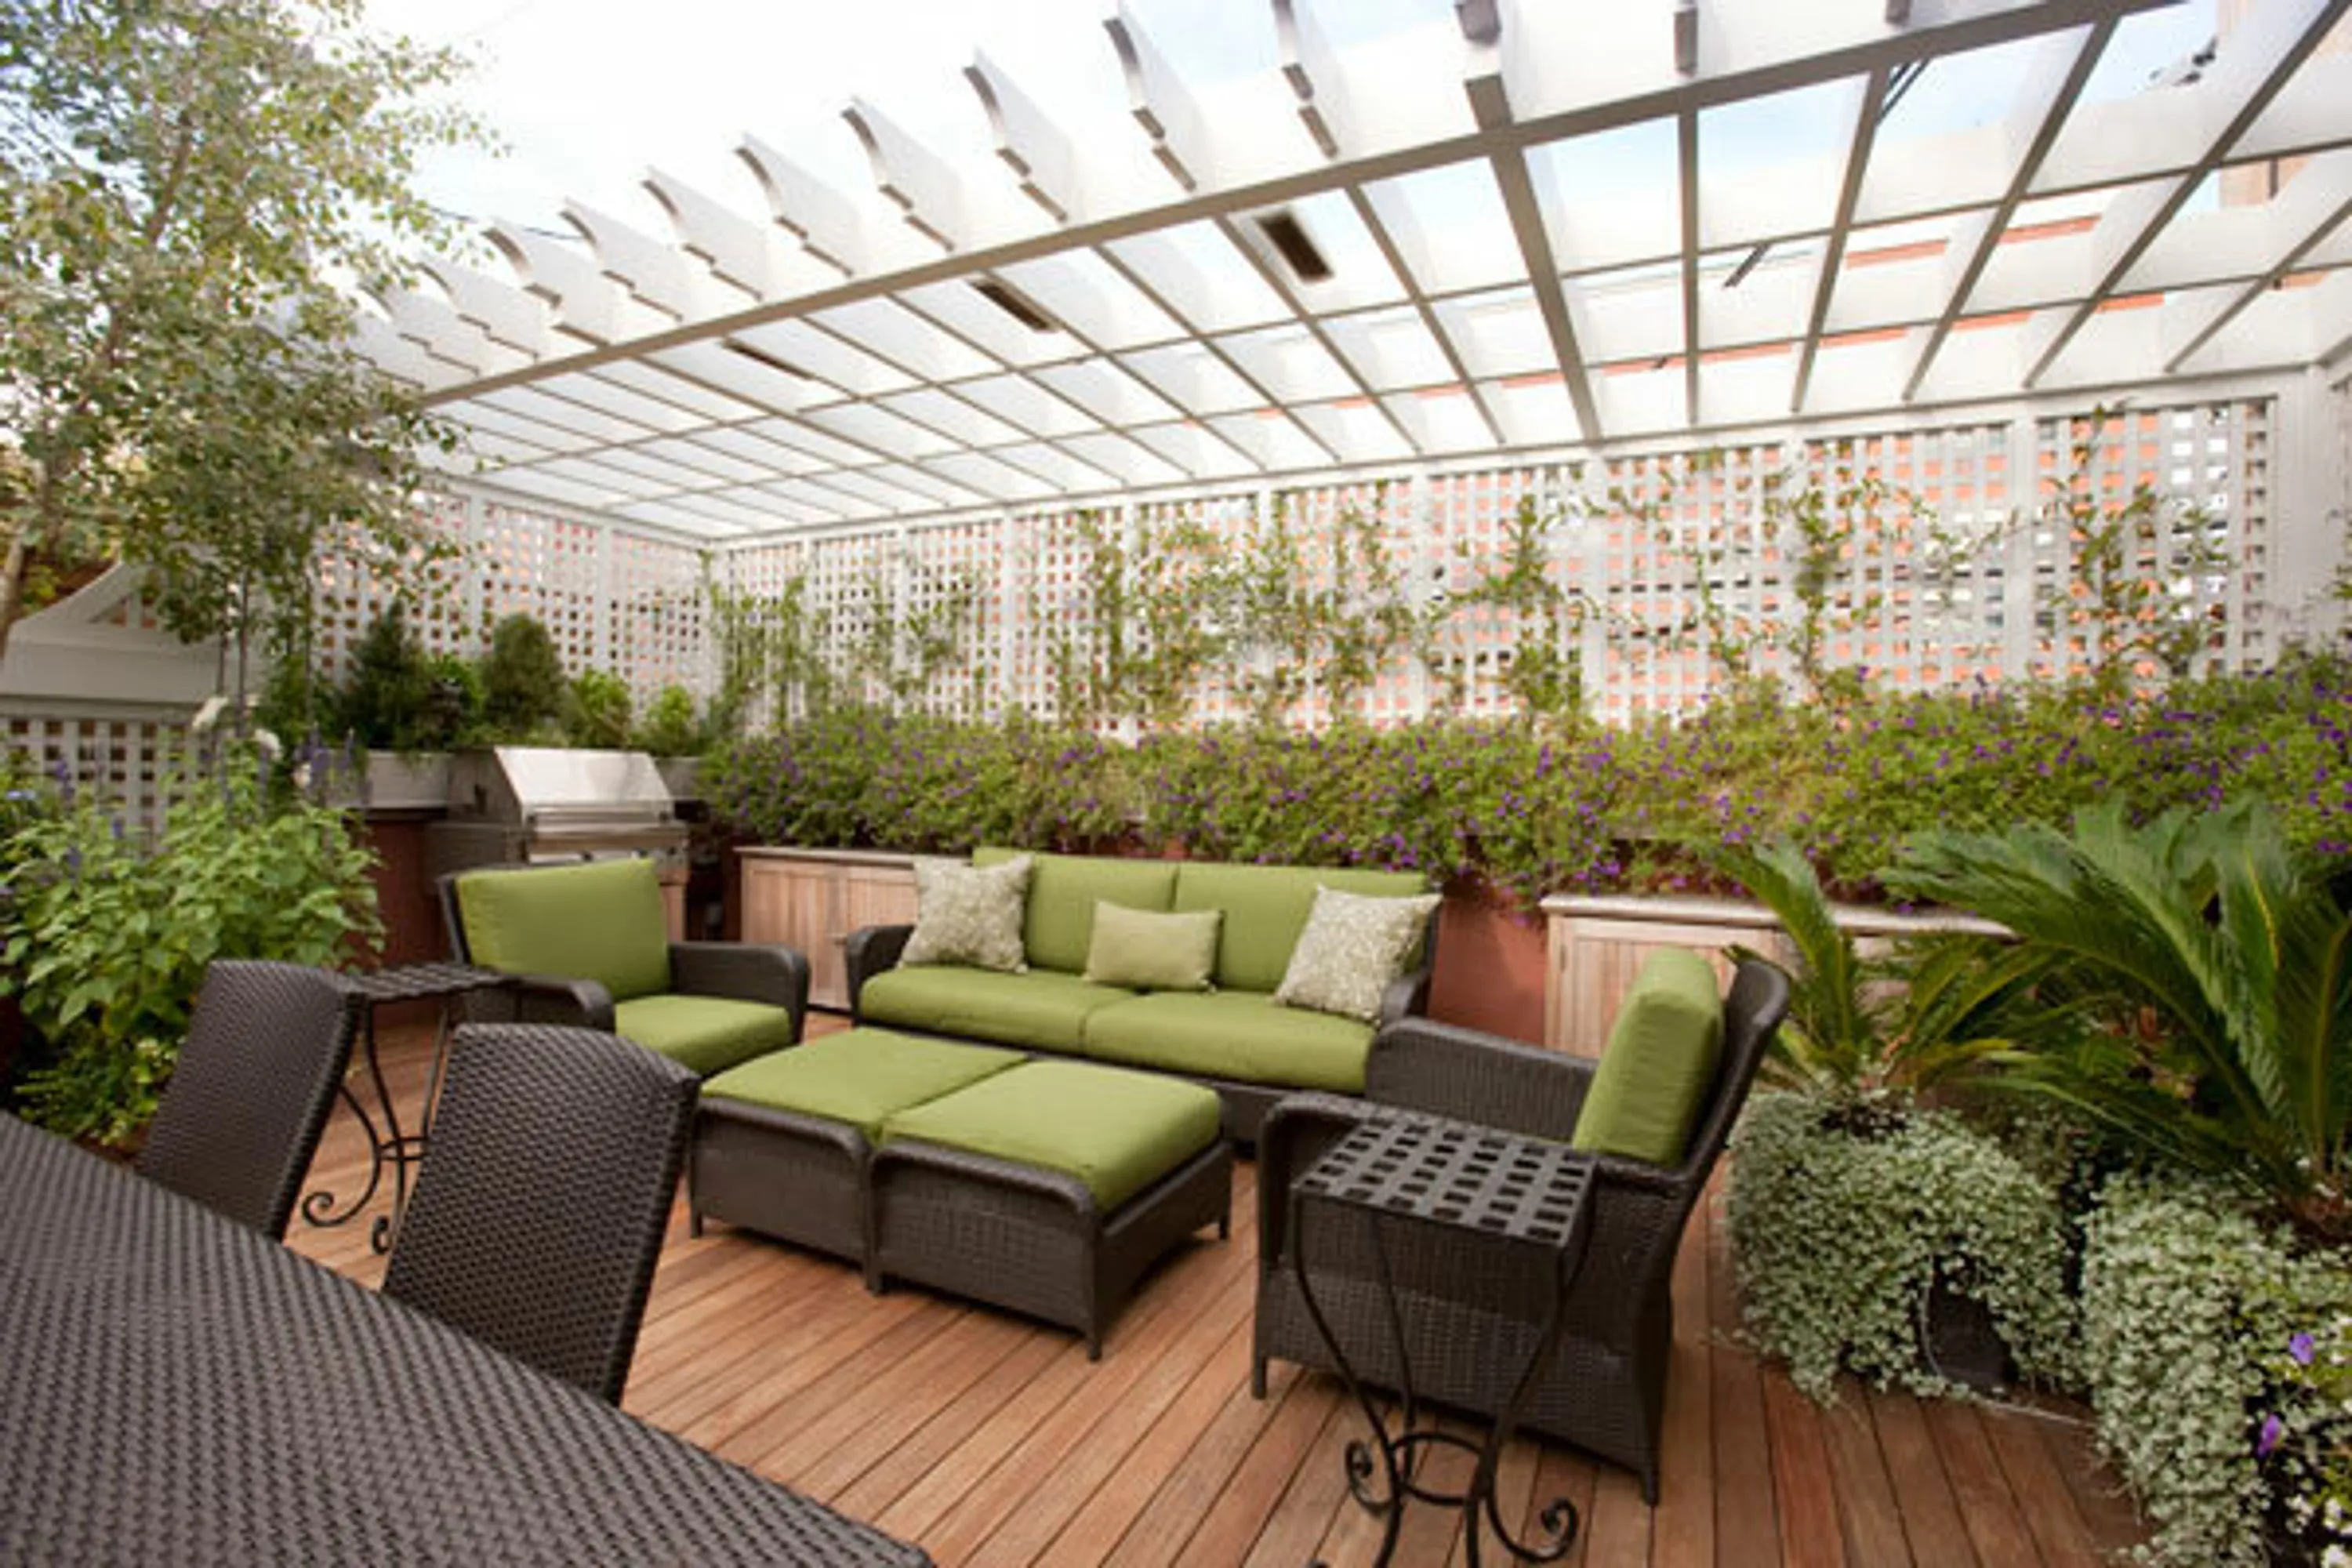 3 seating area fireplace rooftop garden design blog hoerrschaudt